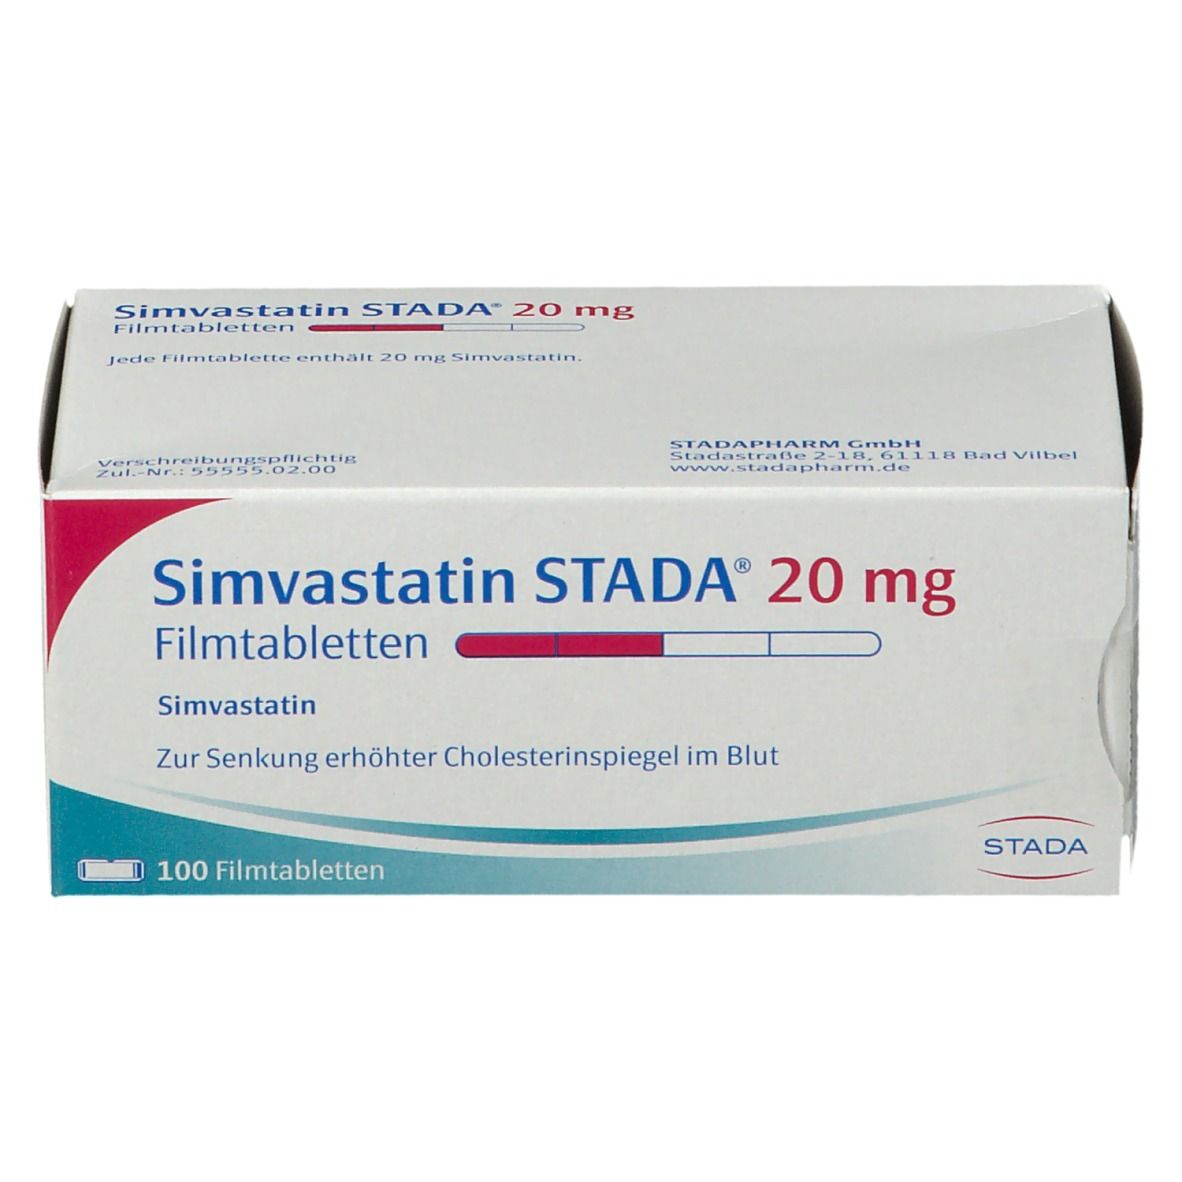 Simvastatin STADA® 20 mg